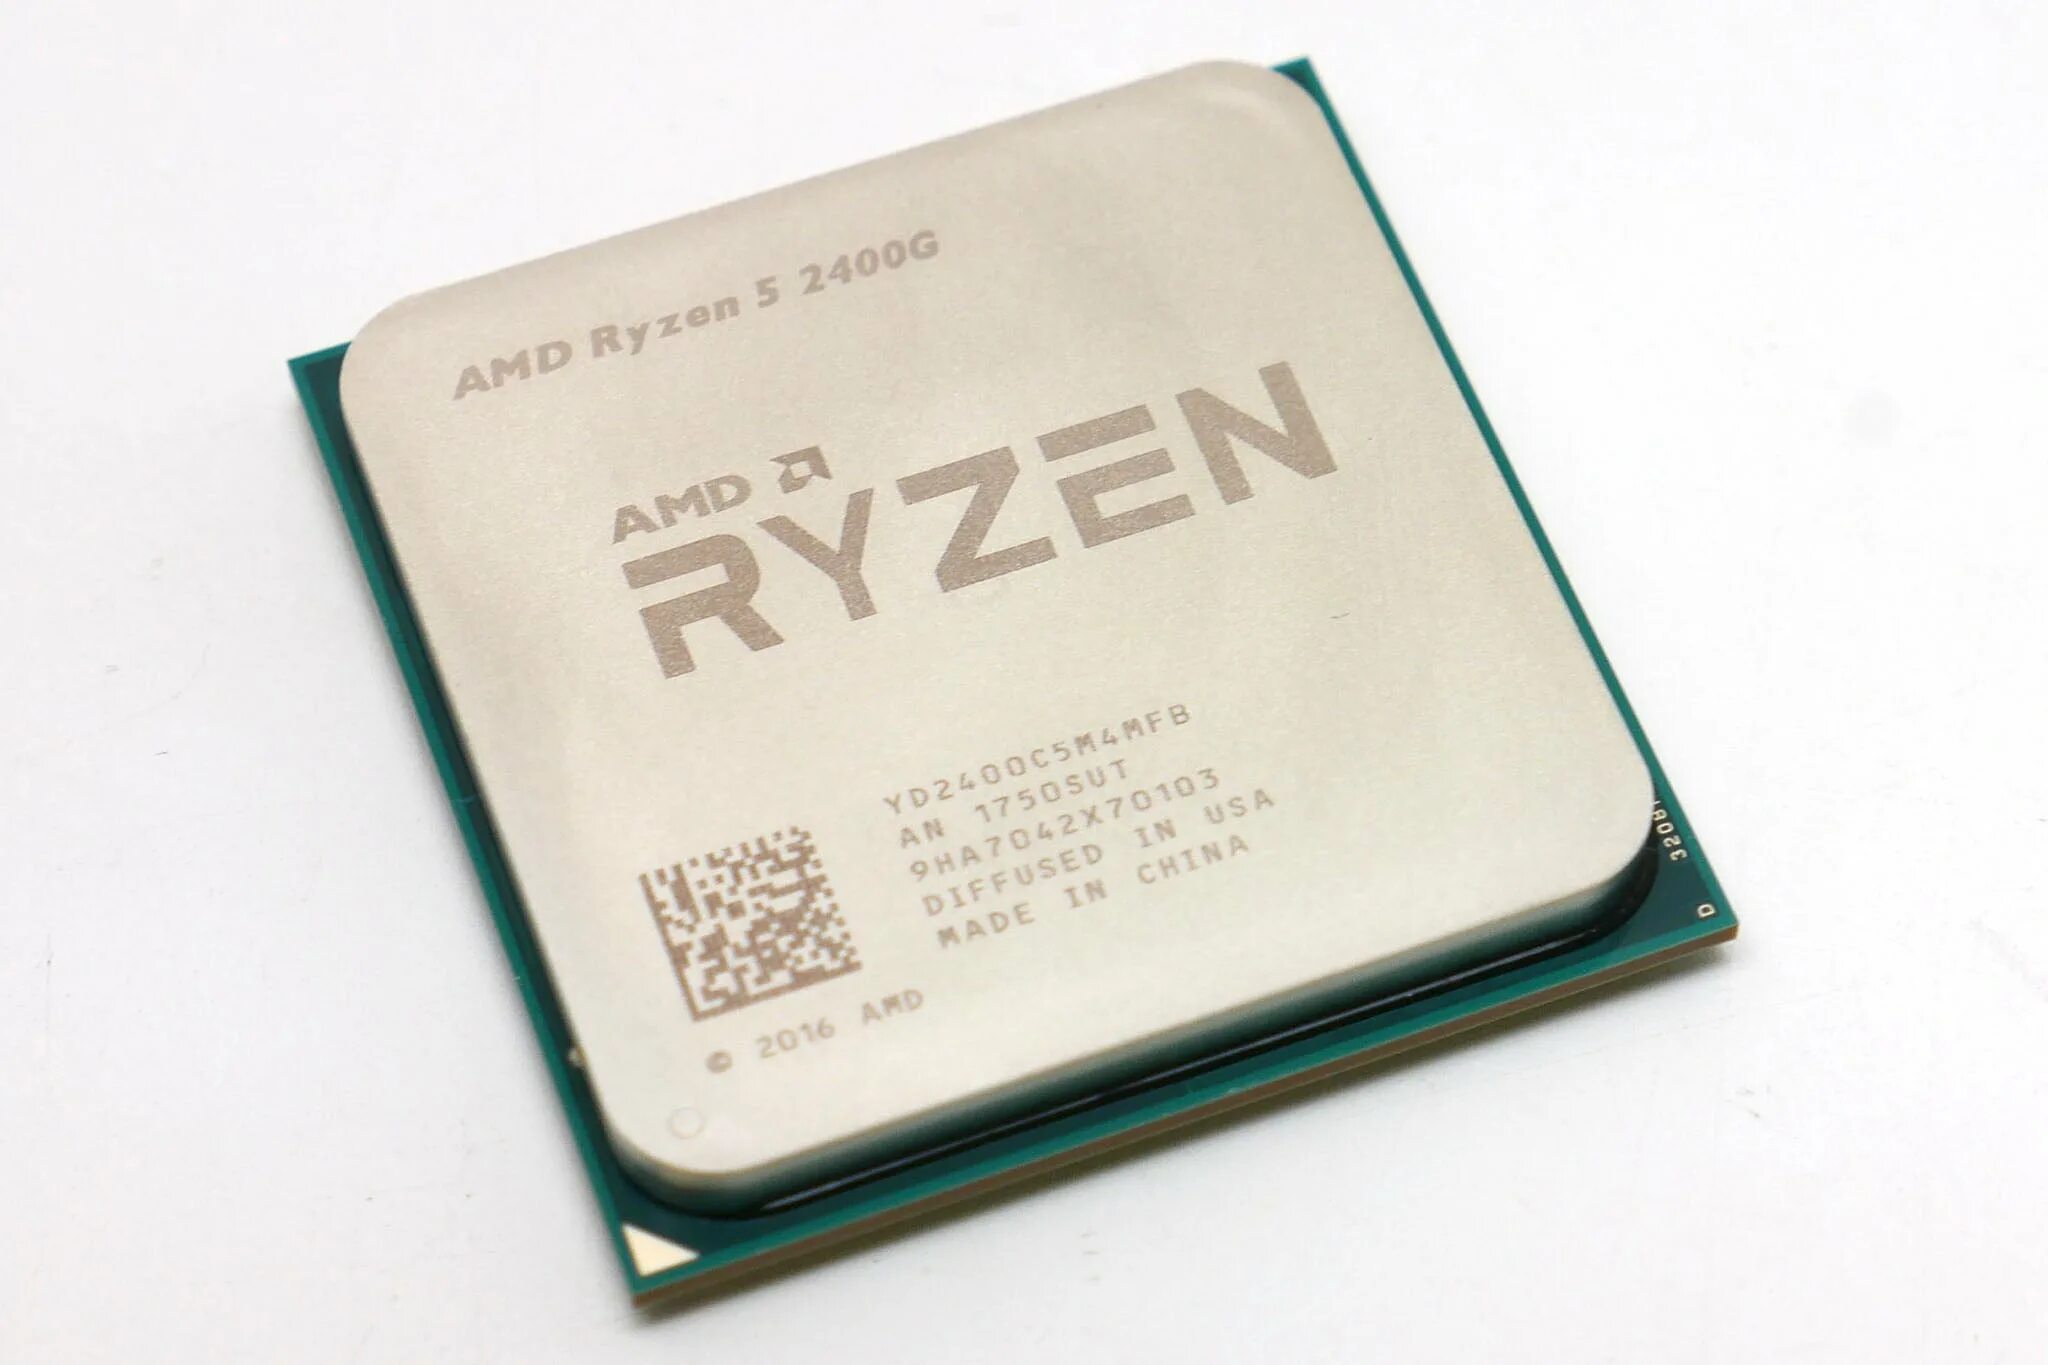 Amd radeon graphics ryzen 5. Процессор AMD Ryzen 5 2400g. Процессор AMD yd2200c5m4mfb. Процессор AMD Ryzen 5 2400g OEM. AMD Ryzen 5 Pro 2400g.